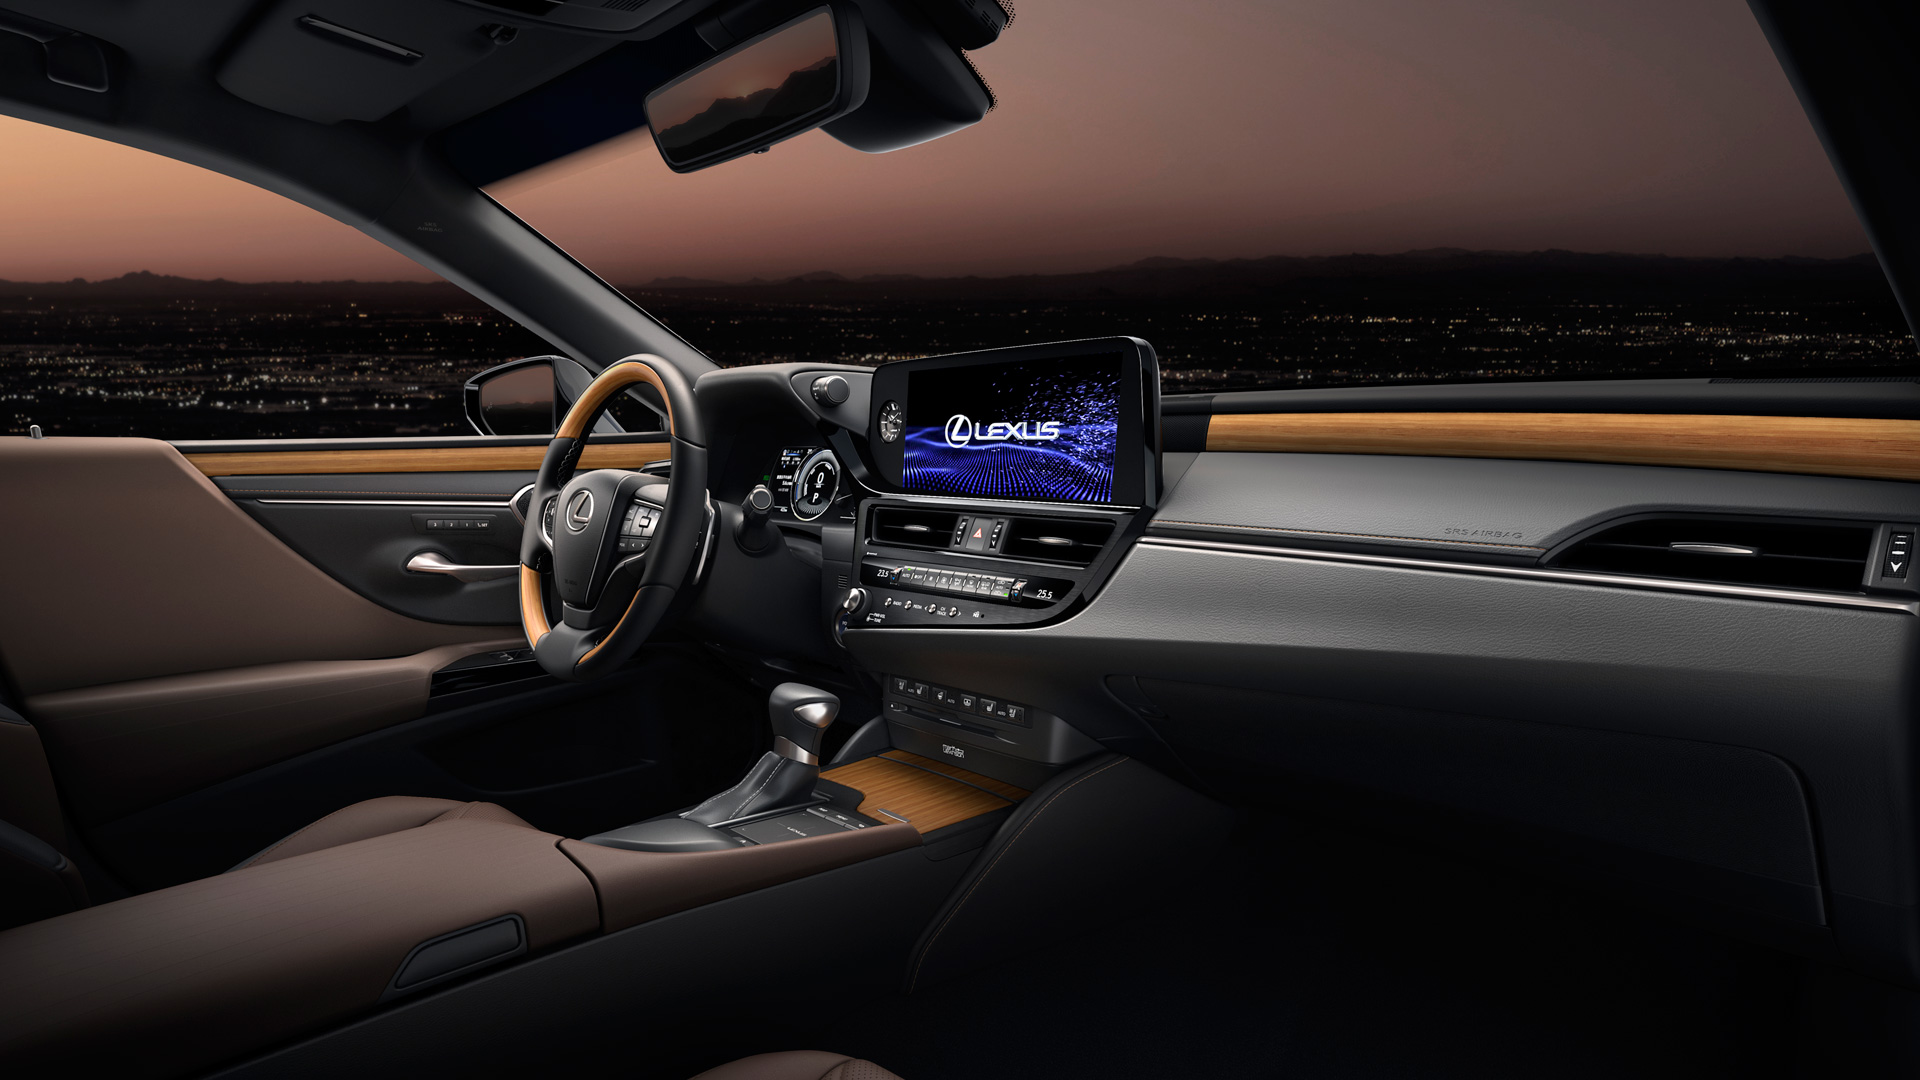 The Lexus ES Dashboard and Steering Wheel